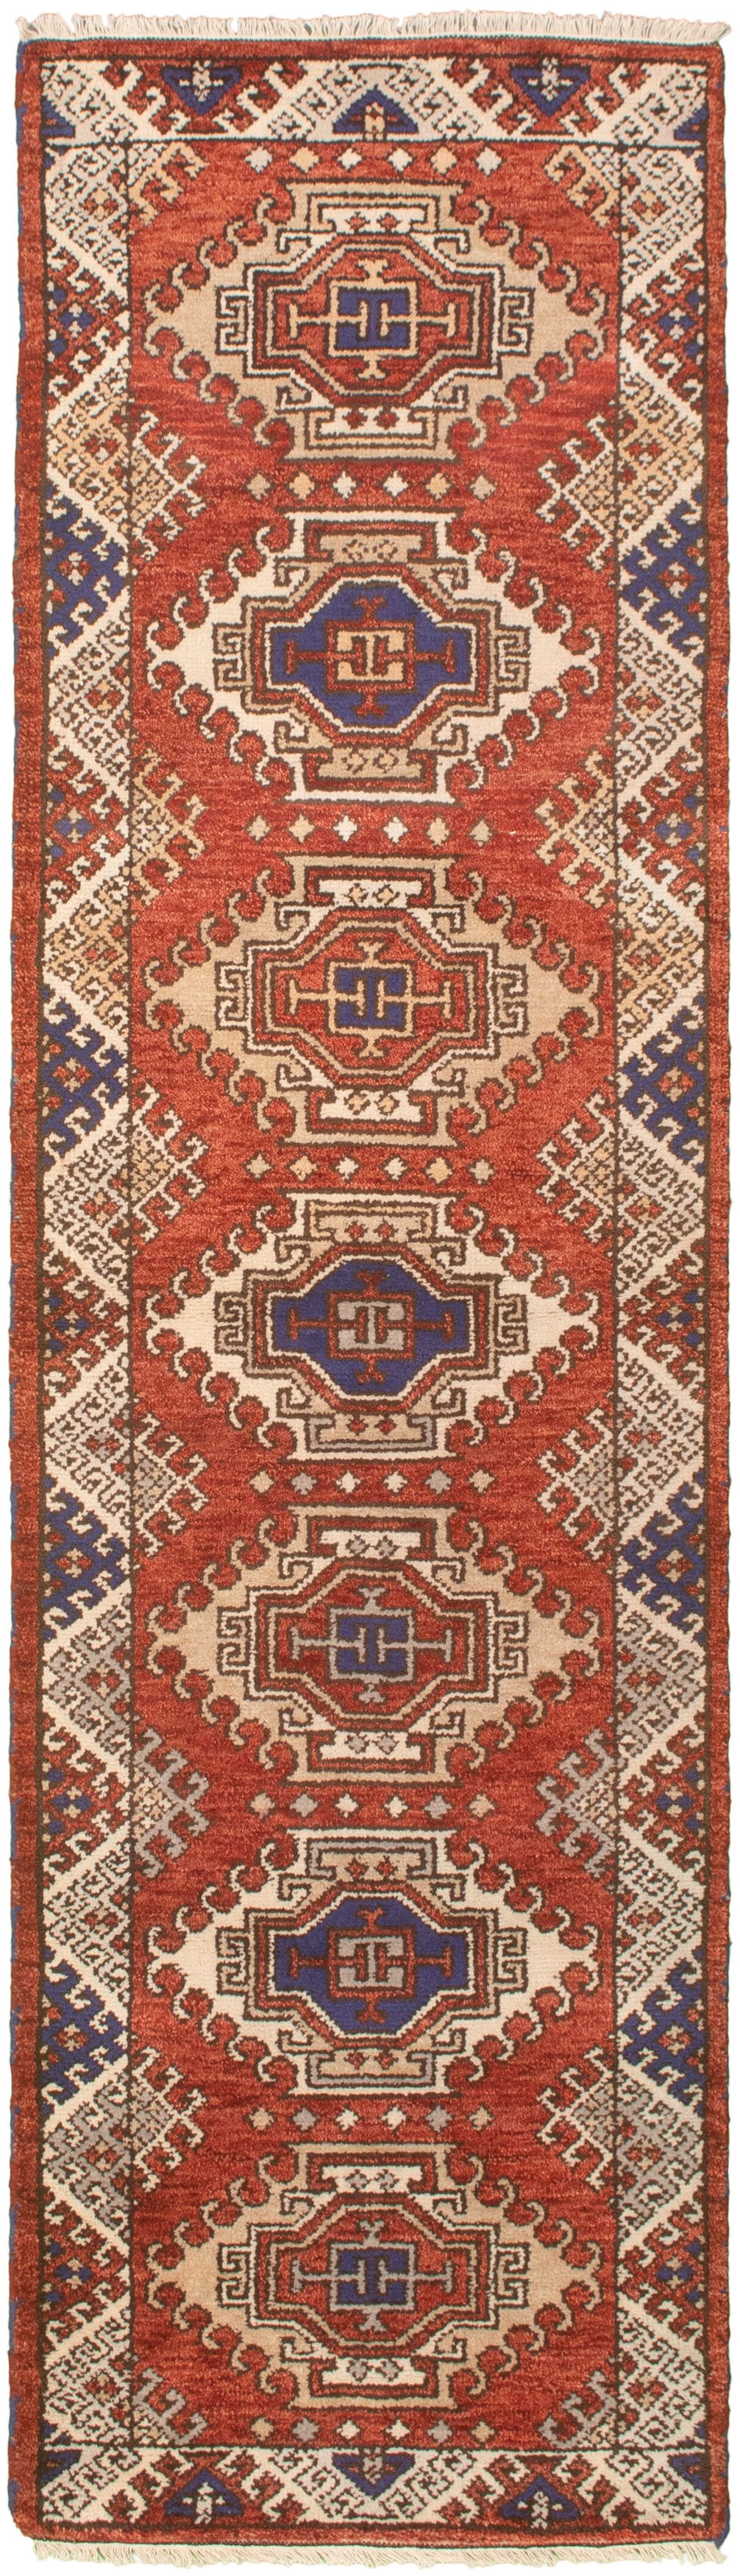 Hand-knotted Royal Kazak Dark Red Wool Rug 2'8" x 9'10"  Size: 2'8" x 9'10"  